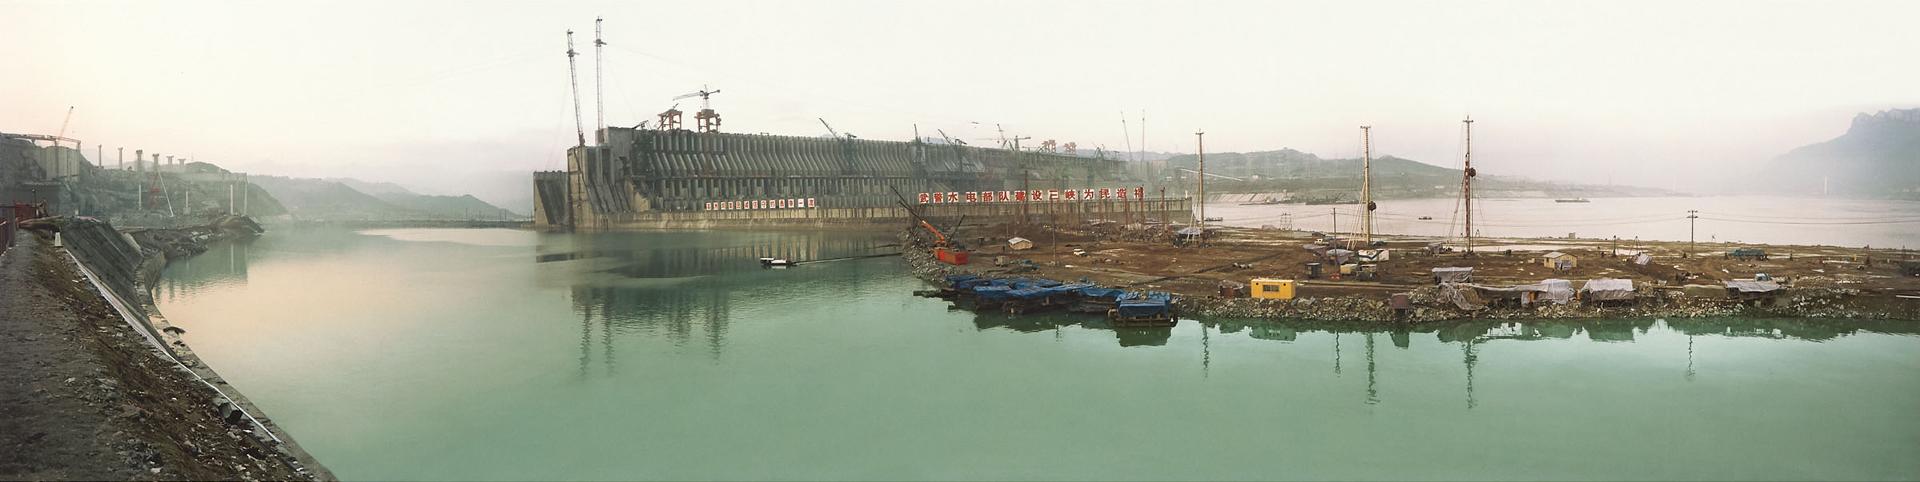 Edward Burtynsky (1955) - Three Gorges Dam Project, Dam #2, Yangtze River, China, 2002